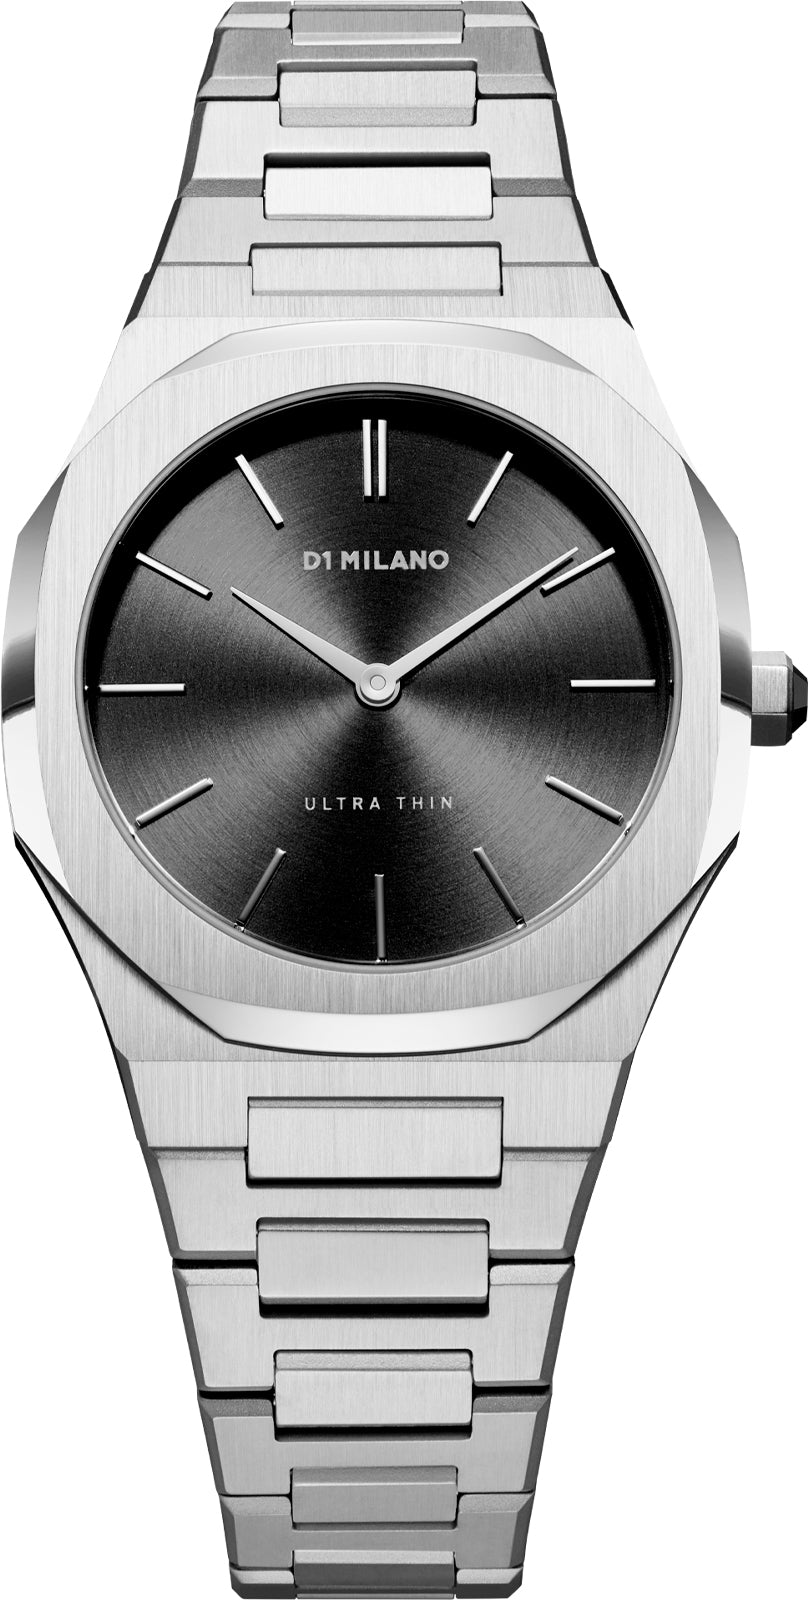 Photos - Wrist Watch Milano D1  Watch Ultra Thin - Black DLM-079 